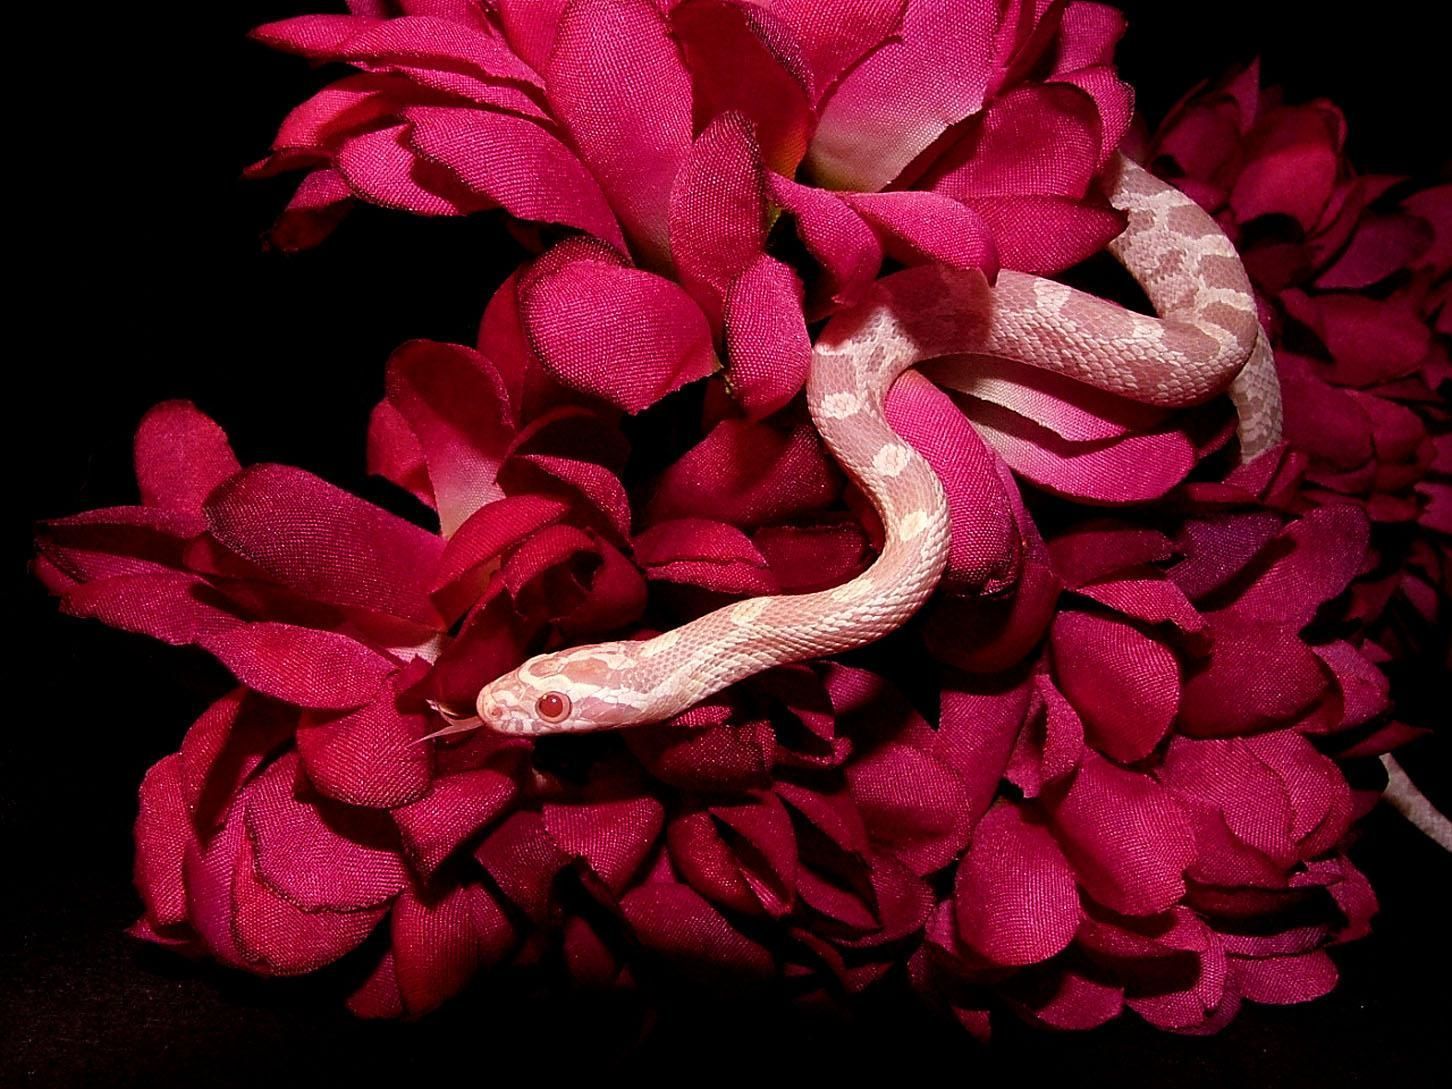 Pink Snake HD Wallpaper Free .wallpaperaccess.com